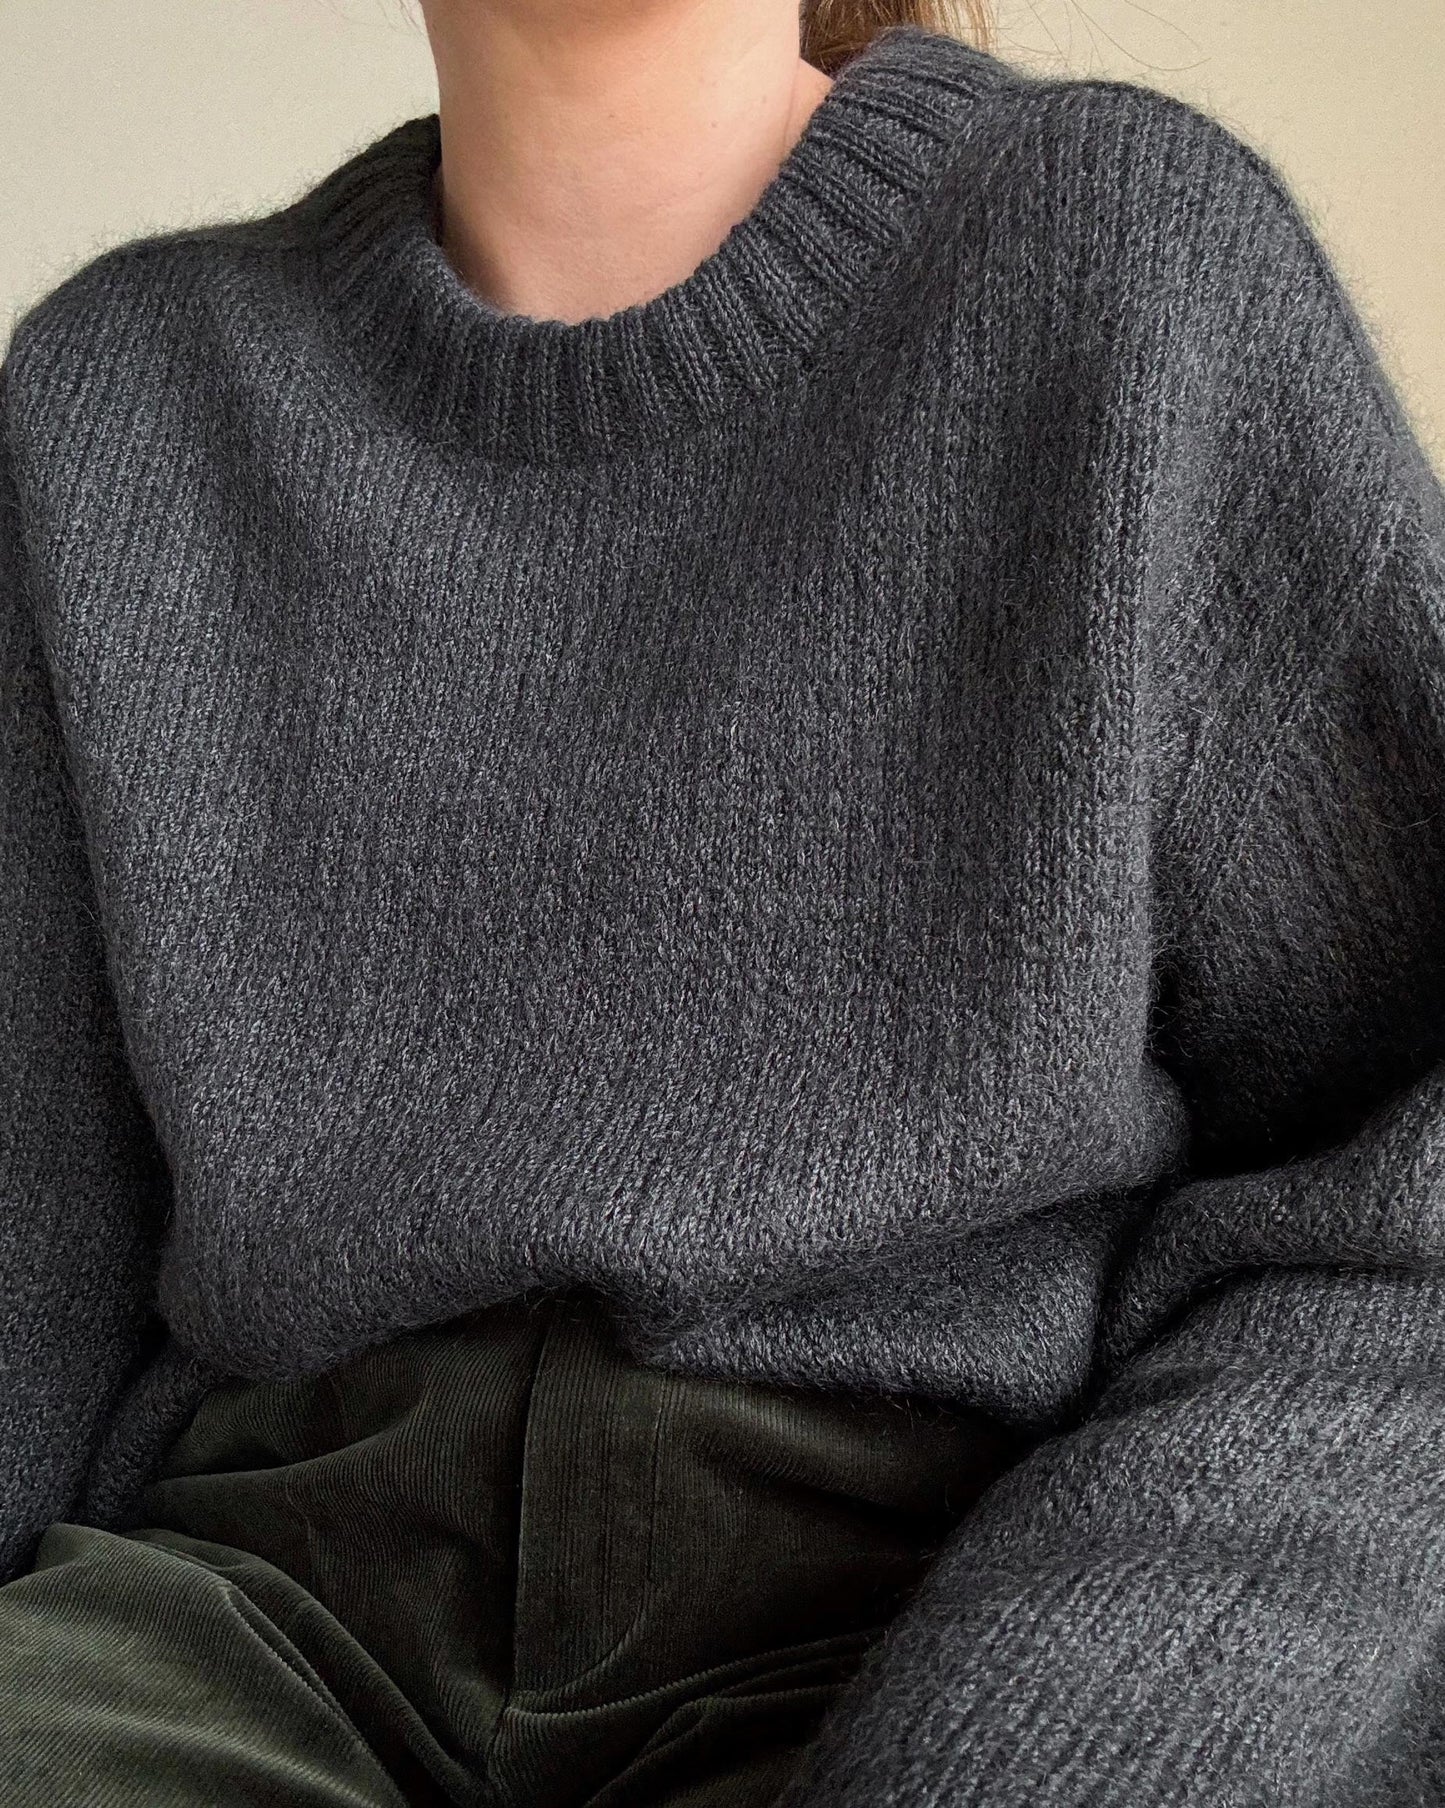 Elegant and classic Chantal Sweater pattern, showcasing morecaknit's signature knitwear craftsmanship.